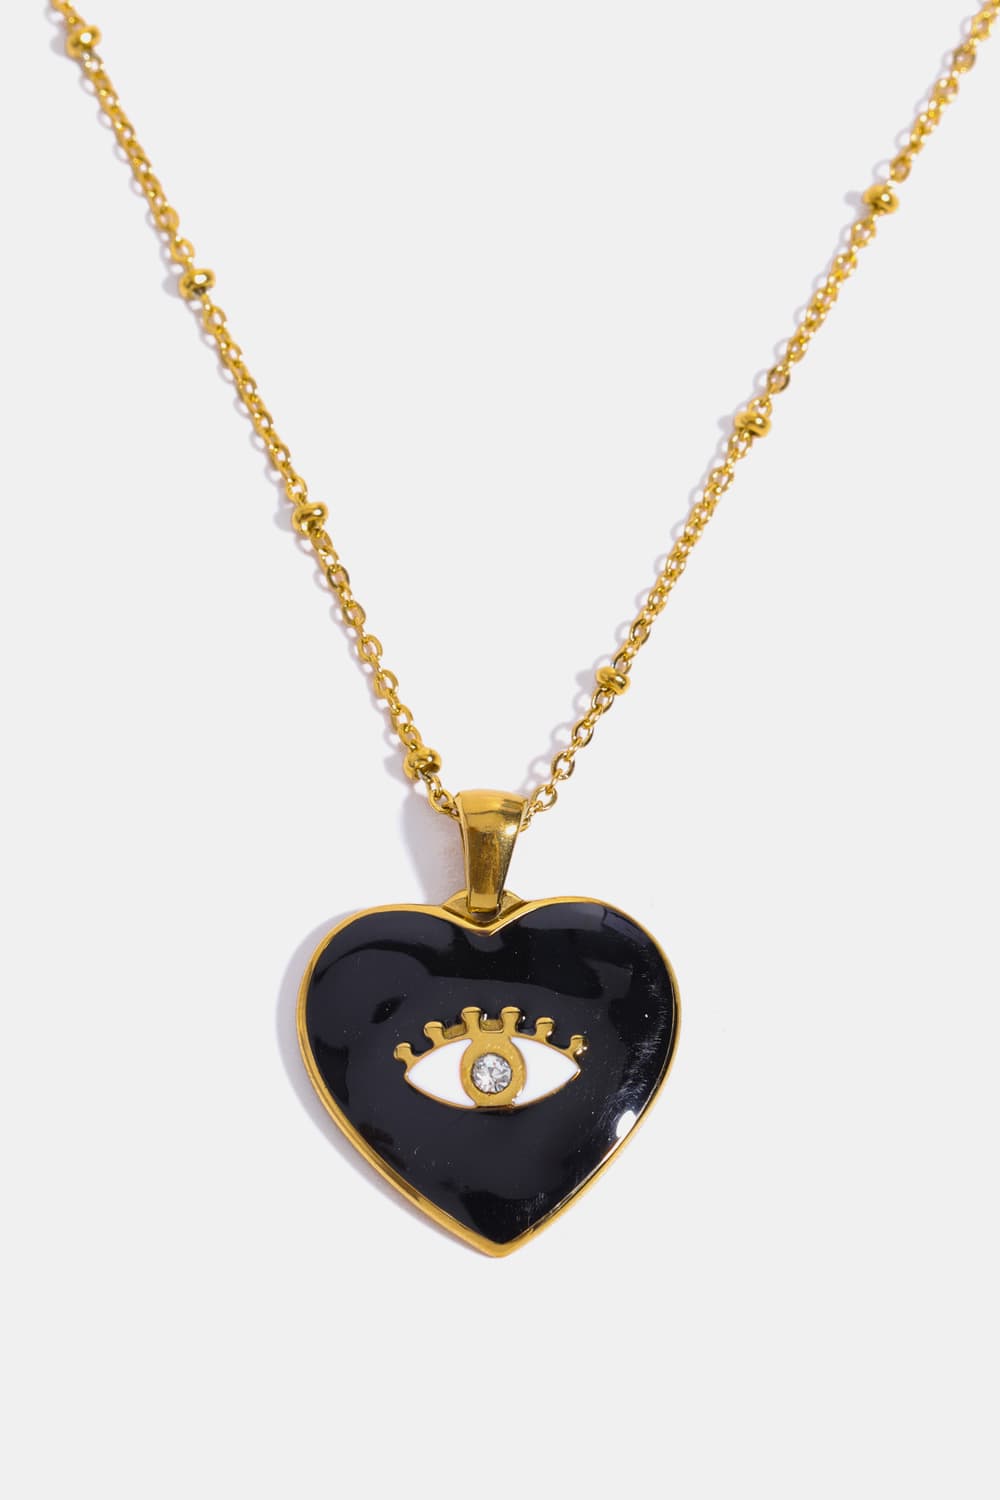 Trendsi Cupid Beauty Supplies Black / One Size Women Necklace Heart & Evil Eye Shape 18K Gold Plated Pendant Necklace